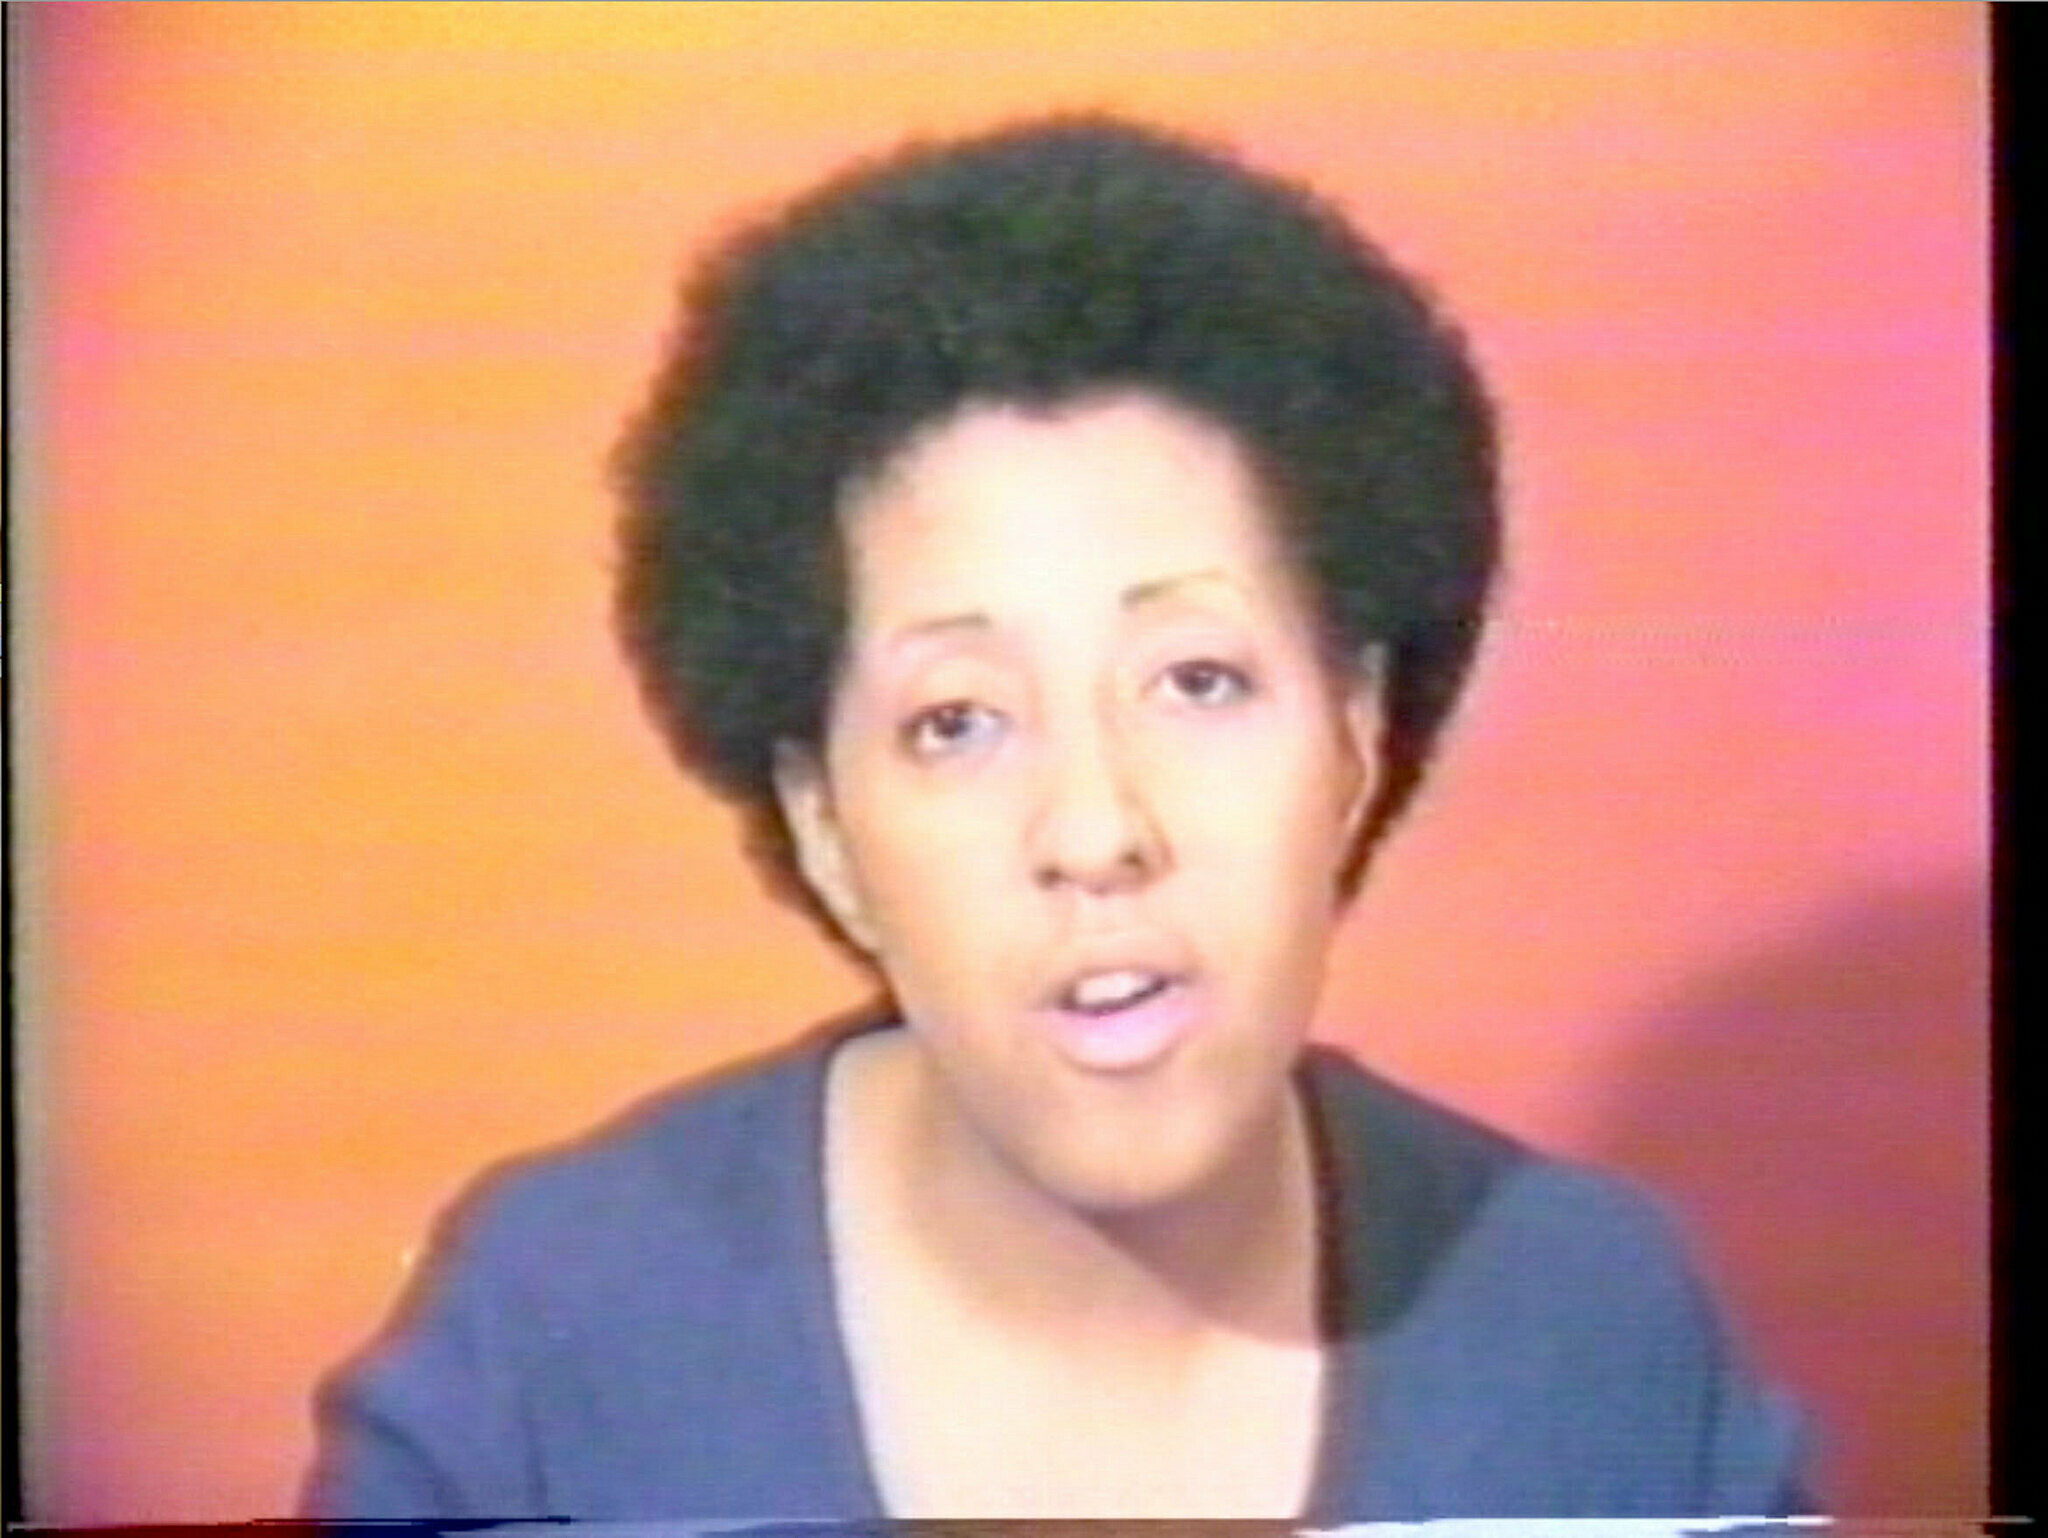 Film still of a woman's head against an orange background.